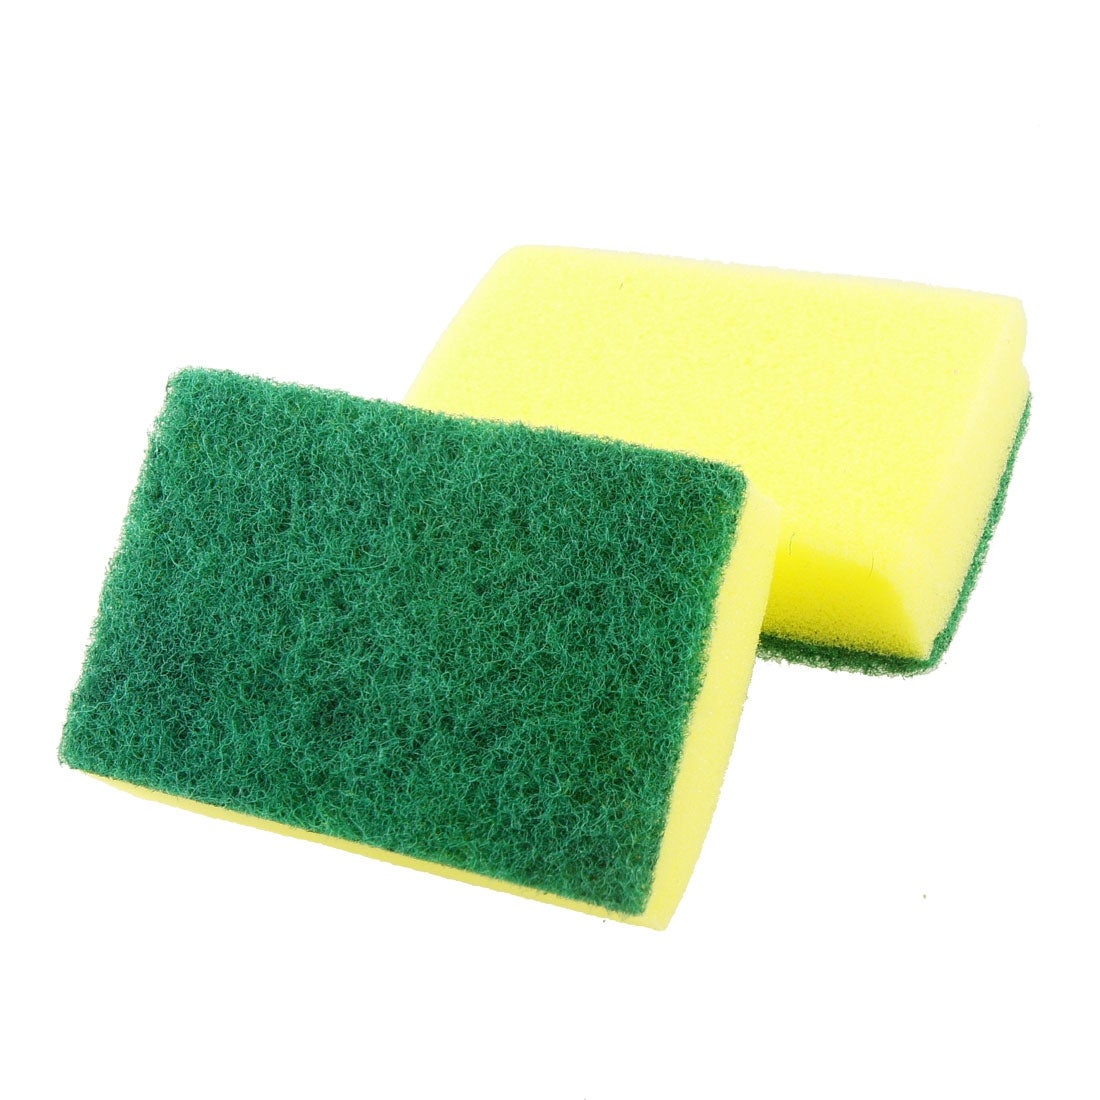 Cleaning Sponge, Dishwashing Sponge, Kitchen Sponge, Double-Sided Cleaning  Sponge, Stain Remover, Scouring Sponge, 20 Pieces 